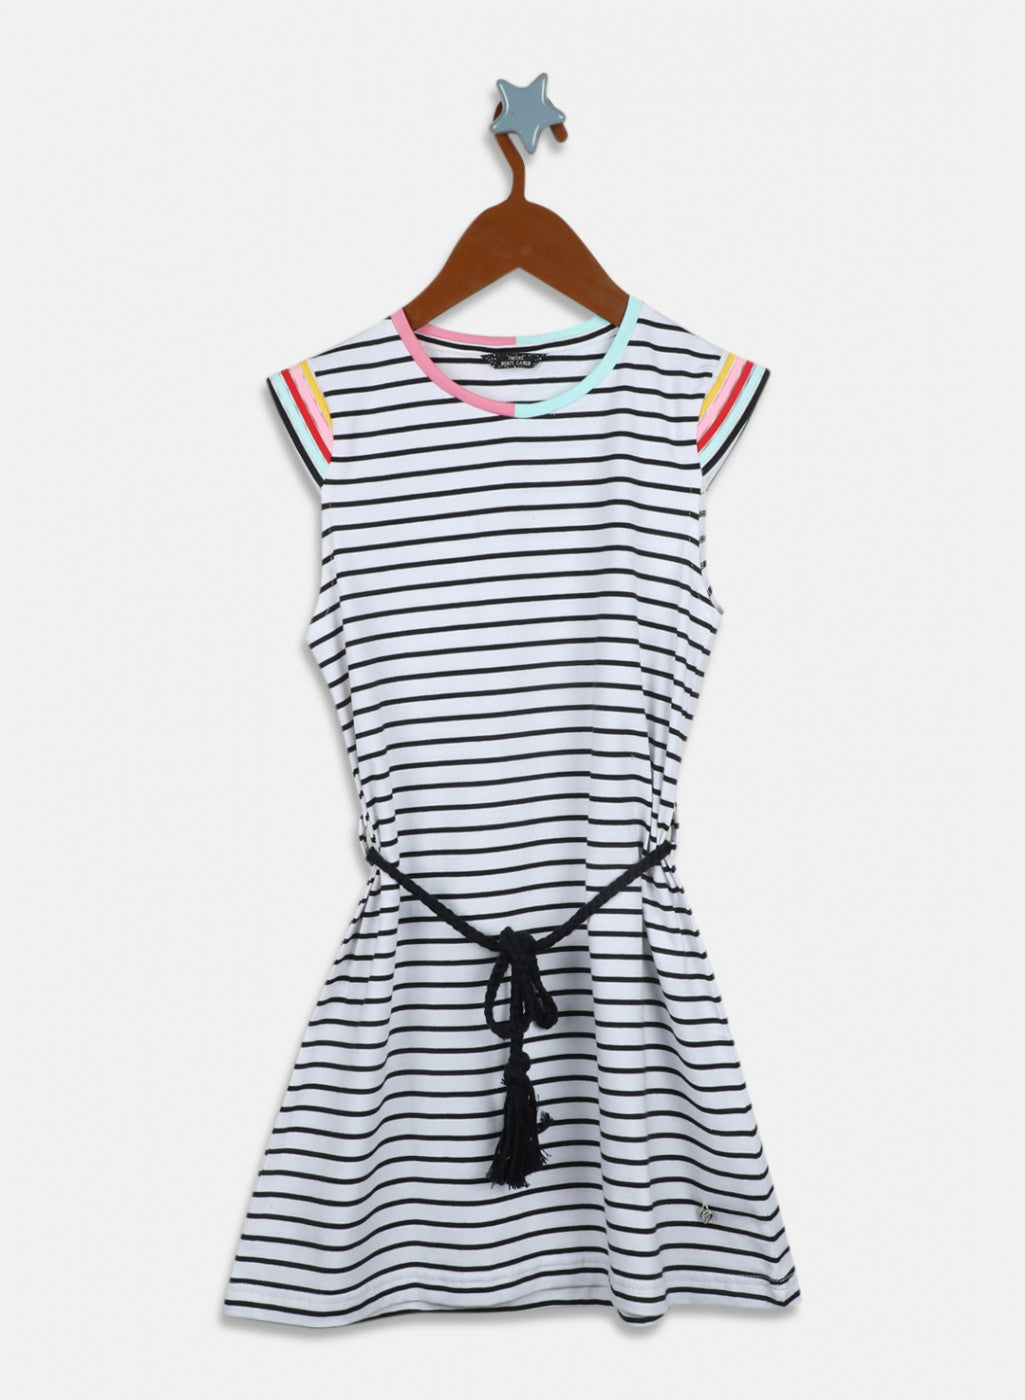 Buy Girls White & Black Stripe Dress Online in India - Monte Carlo